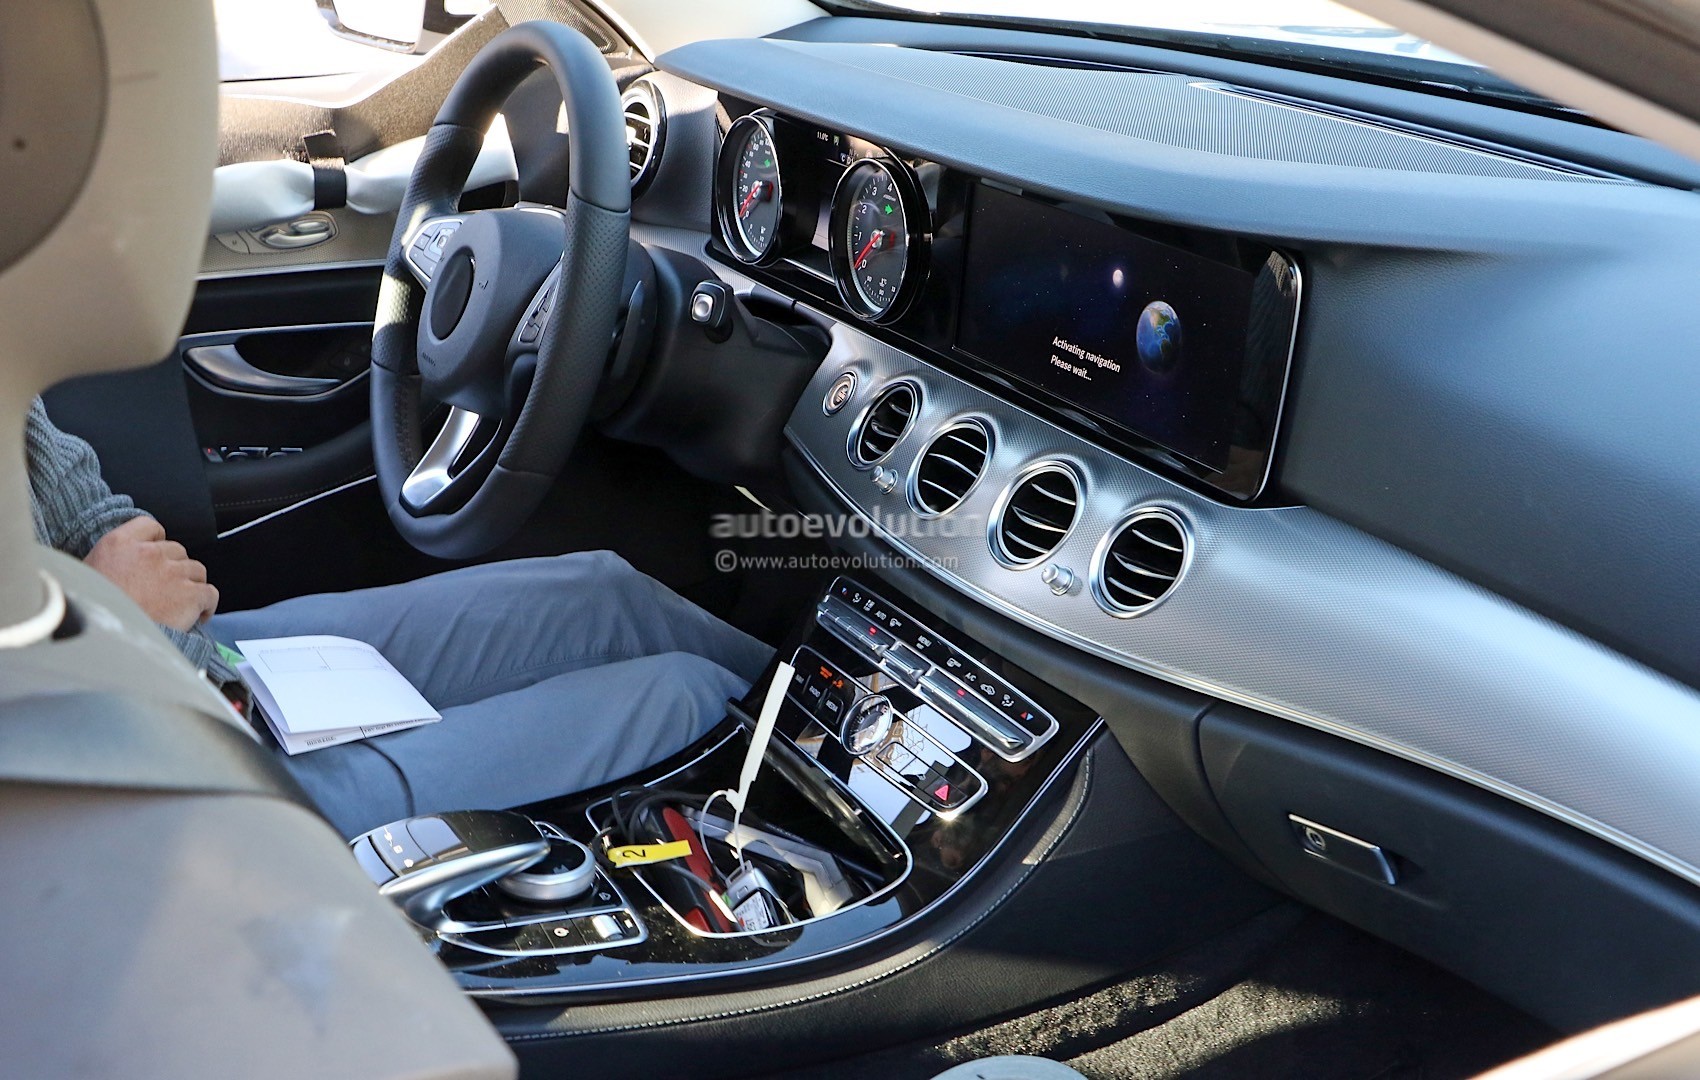 2017 Mercedes-Benz E-Class Interior Revealed in Latest Spyshots